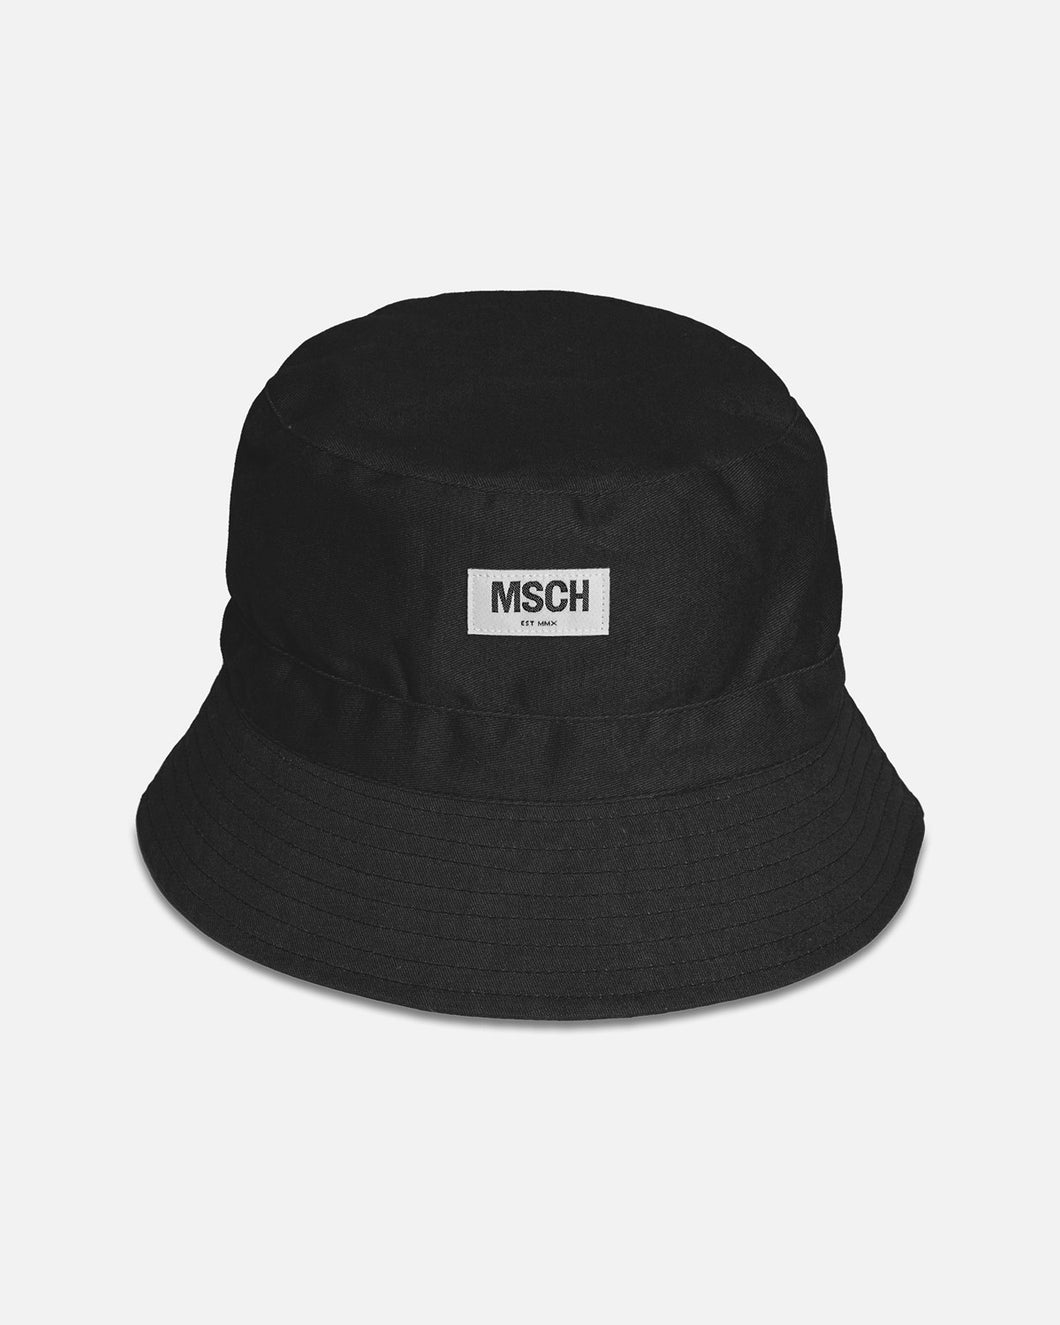 MOSS COPENHAGEN MSCHBalou Bucket Hat Black